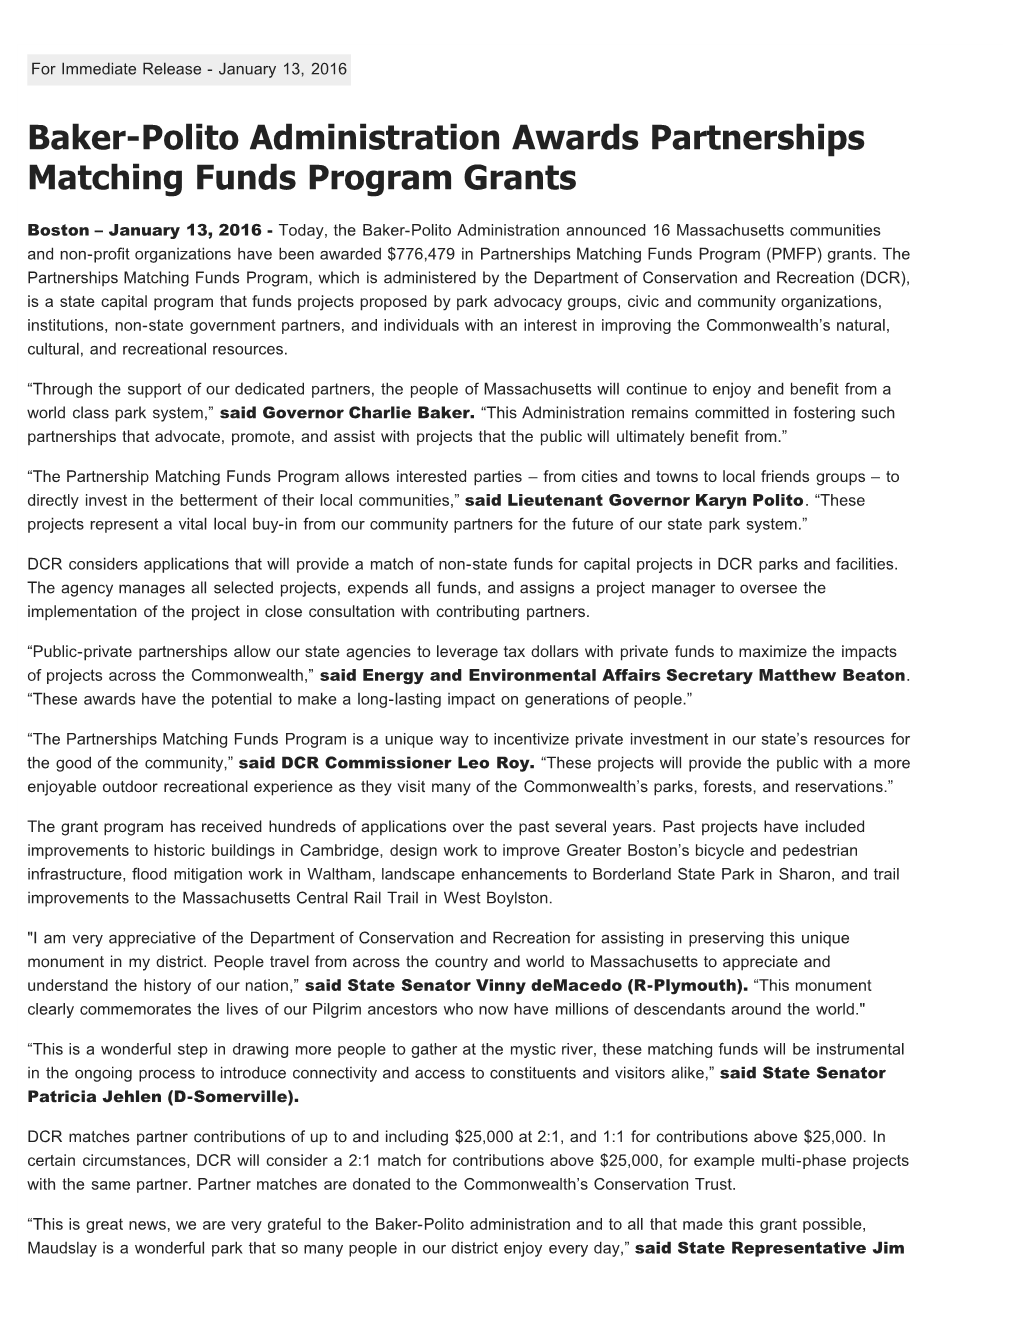 Baker-Polito Administration Awards Partnerships Matching Funds Program Grants